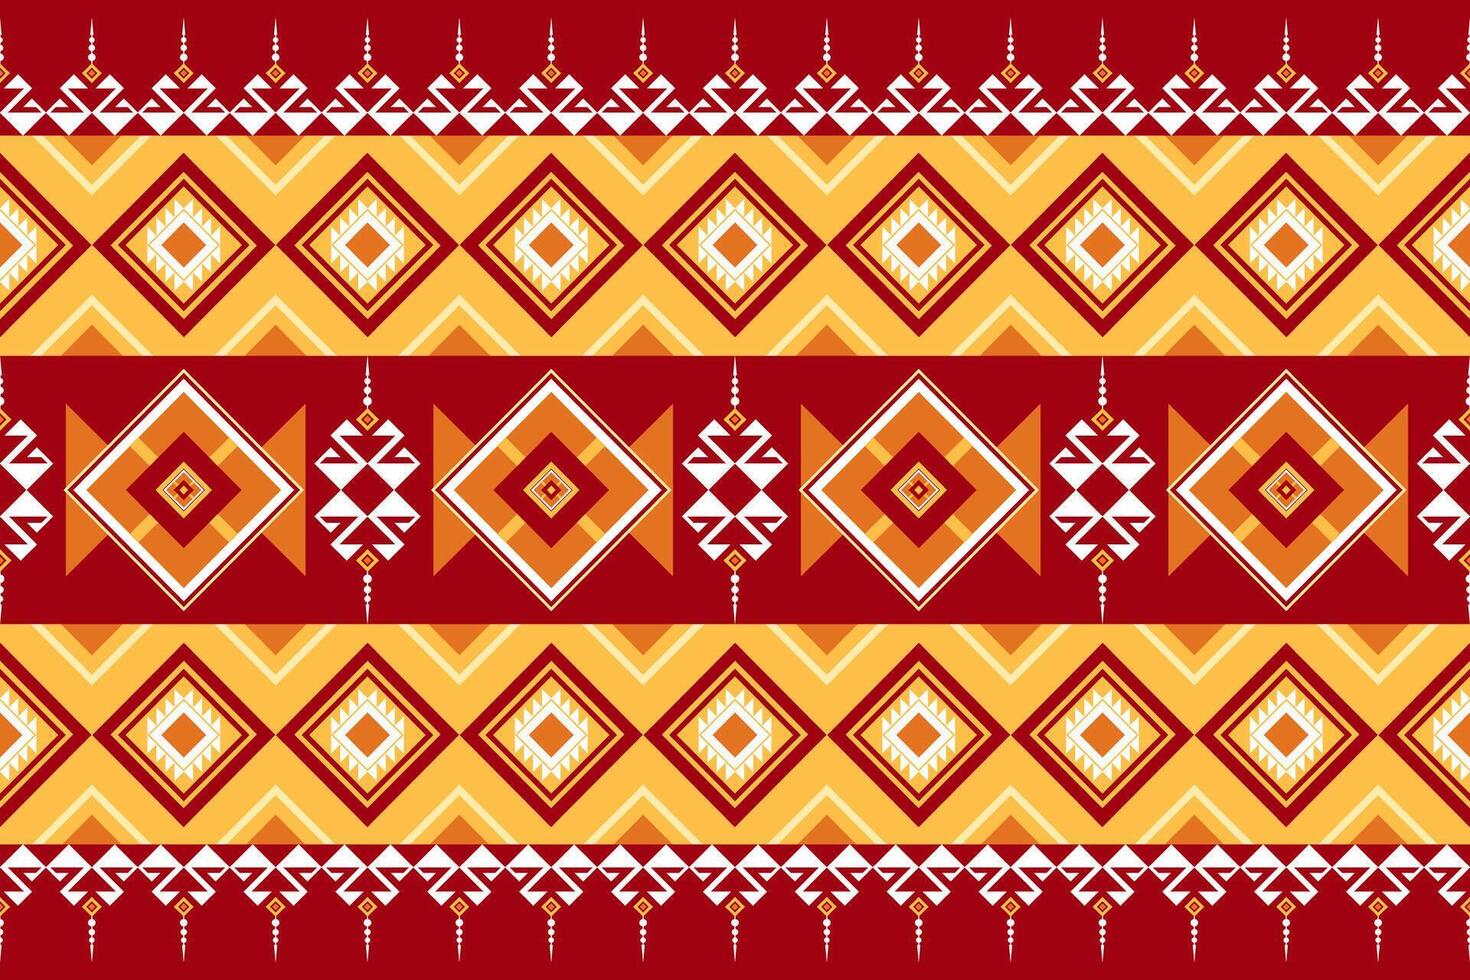 geometrisk sömlös etnisk mönster. geometrisk etnisk mönster kan vara Begagnade i tyg design för kläder, omslag, textil, broderi, matta, stam- mönster vektor